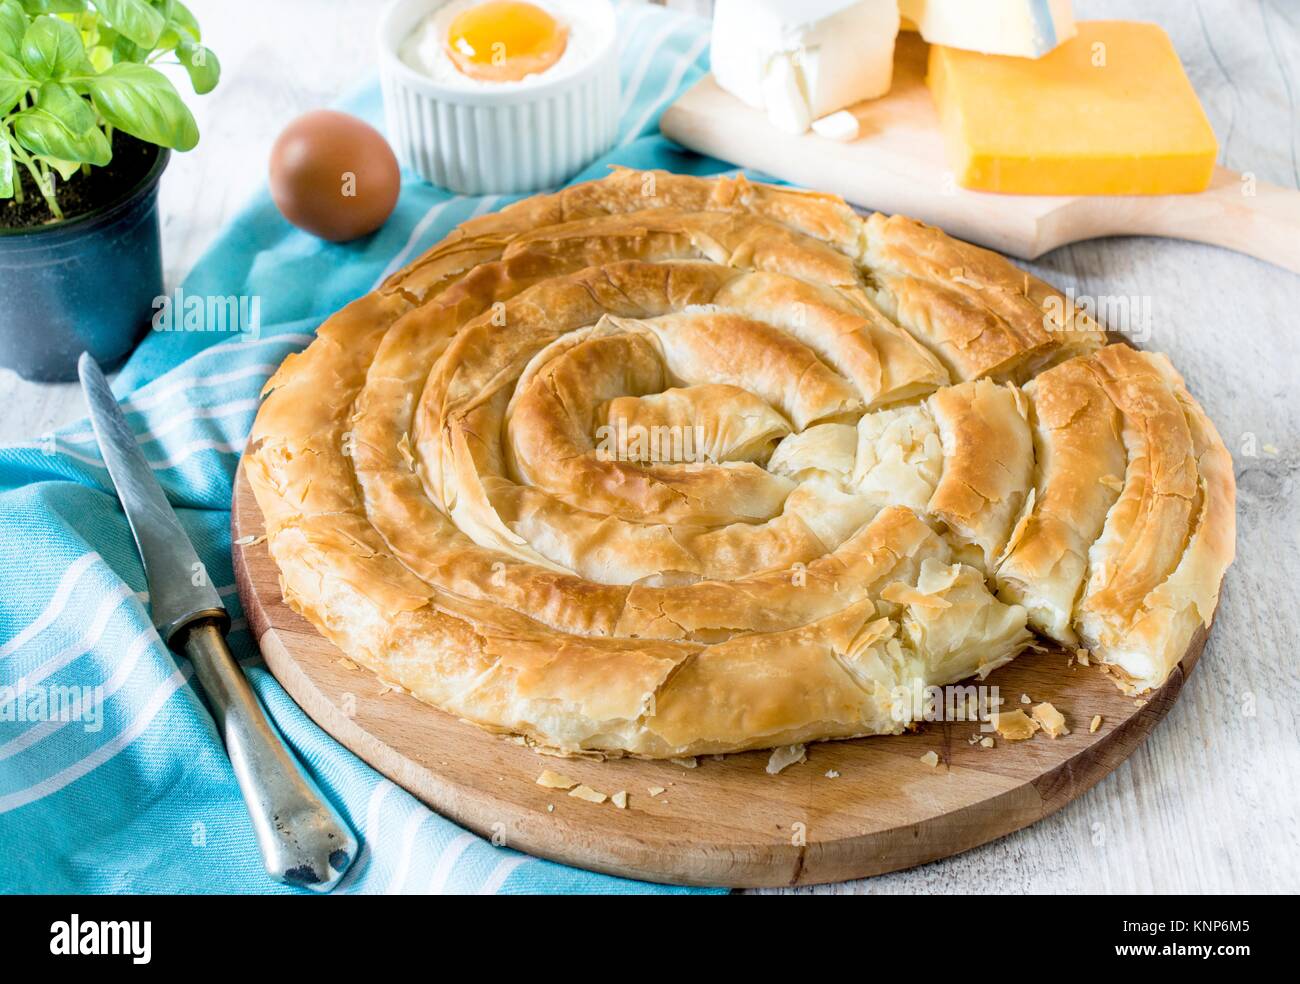 Baked cheese pie Stock Photo - Alamy